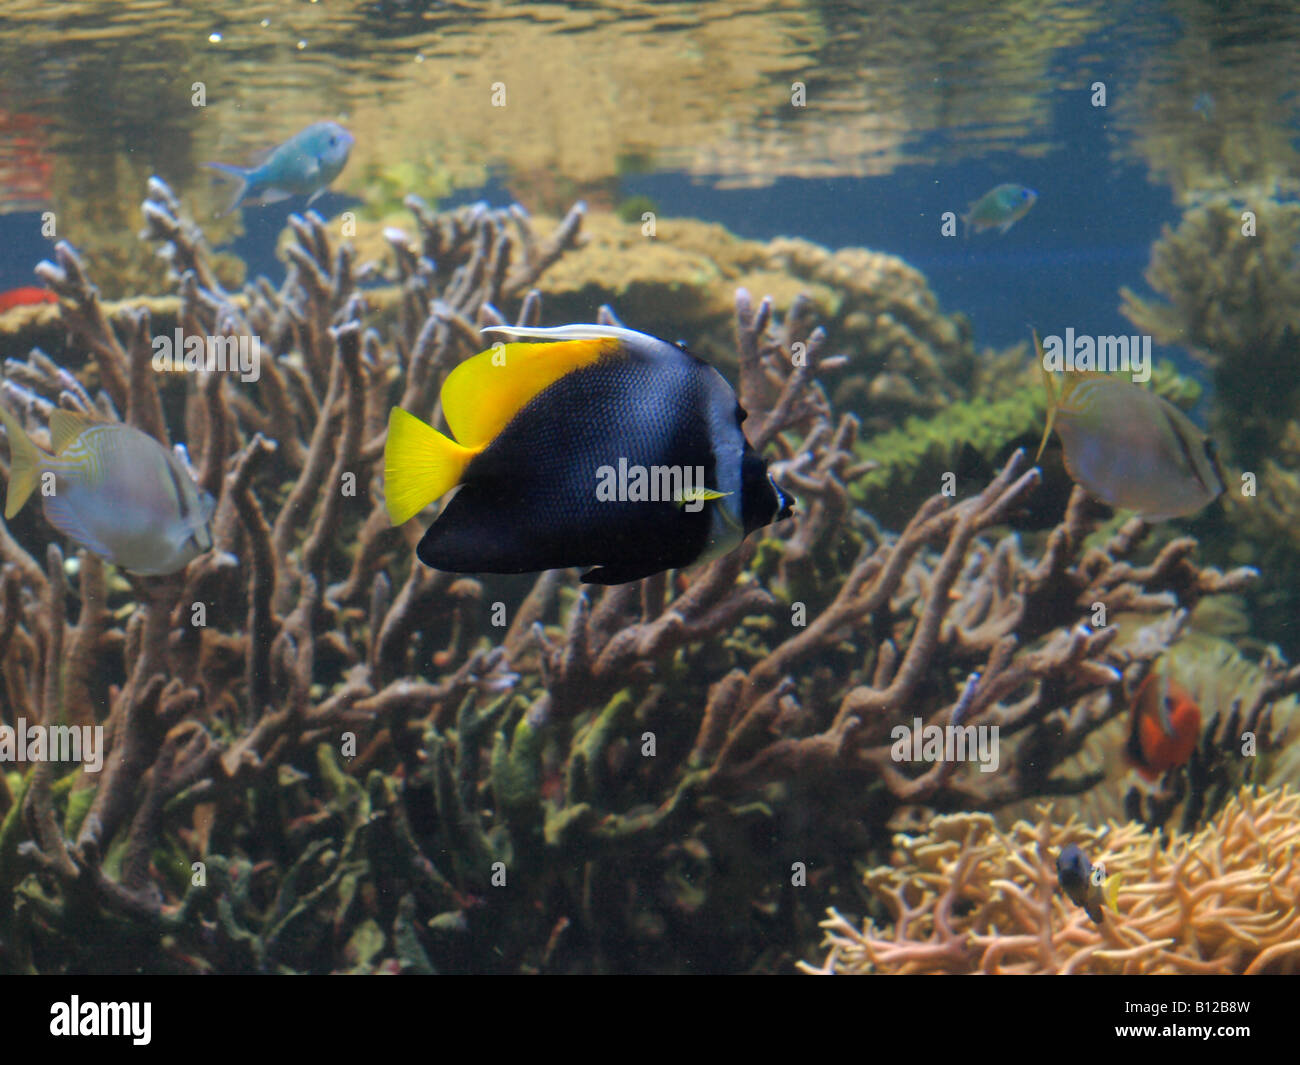 underwater marine life colorful tropical fish Stock Photo